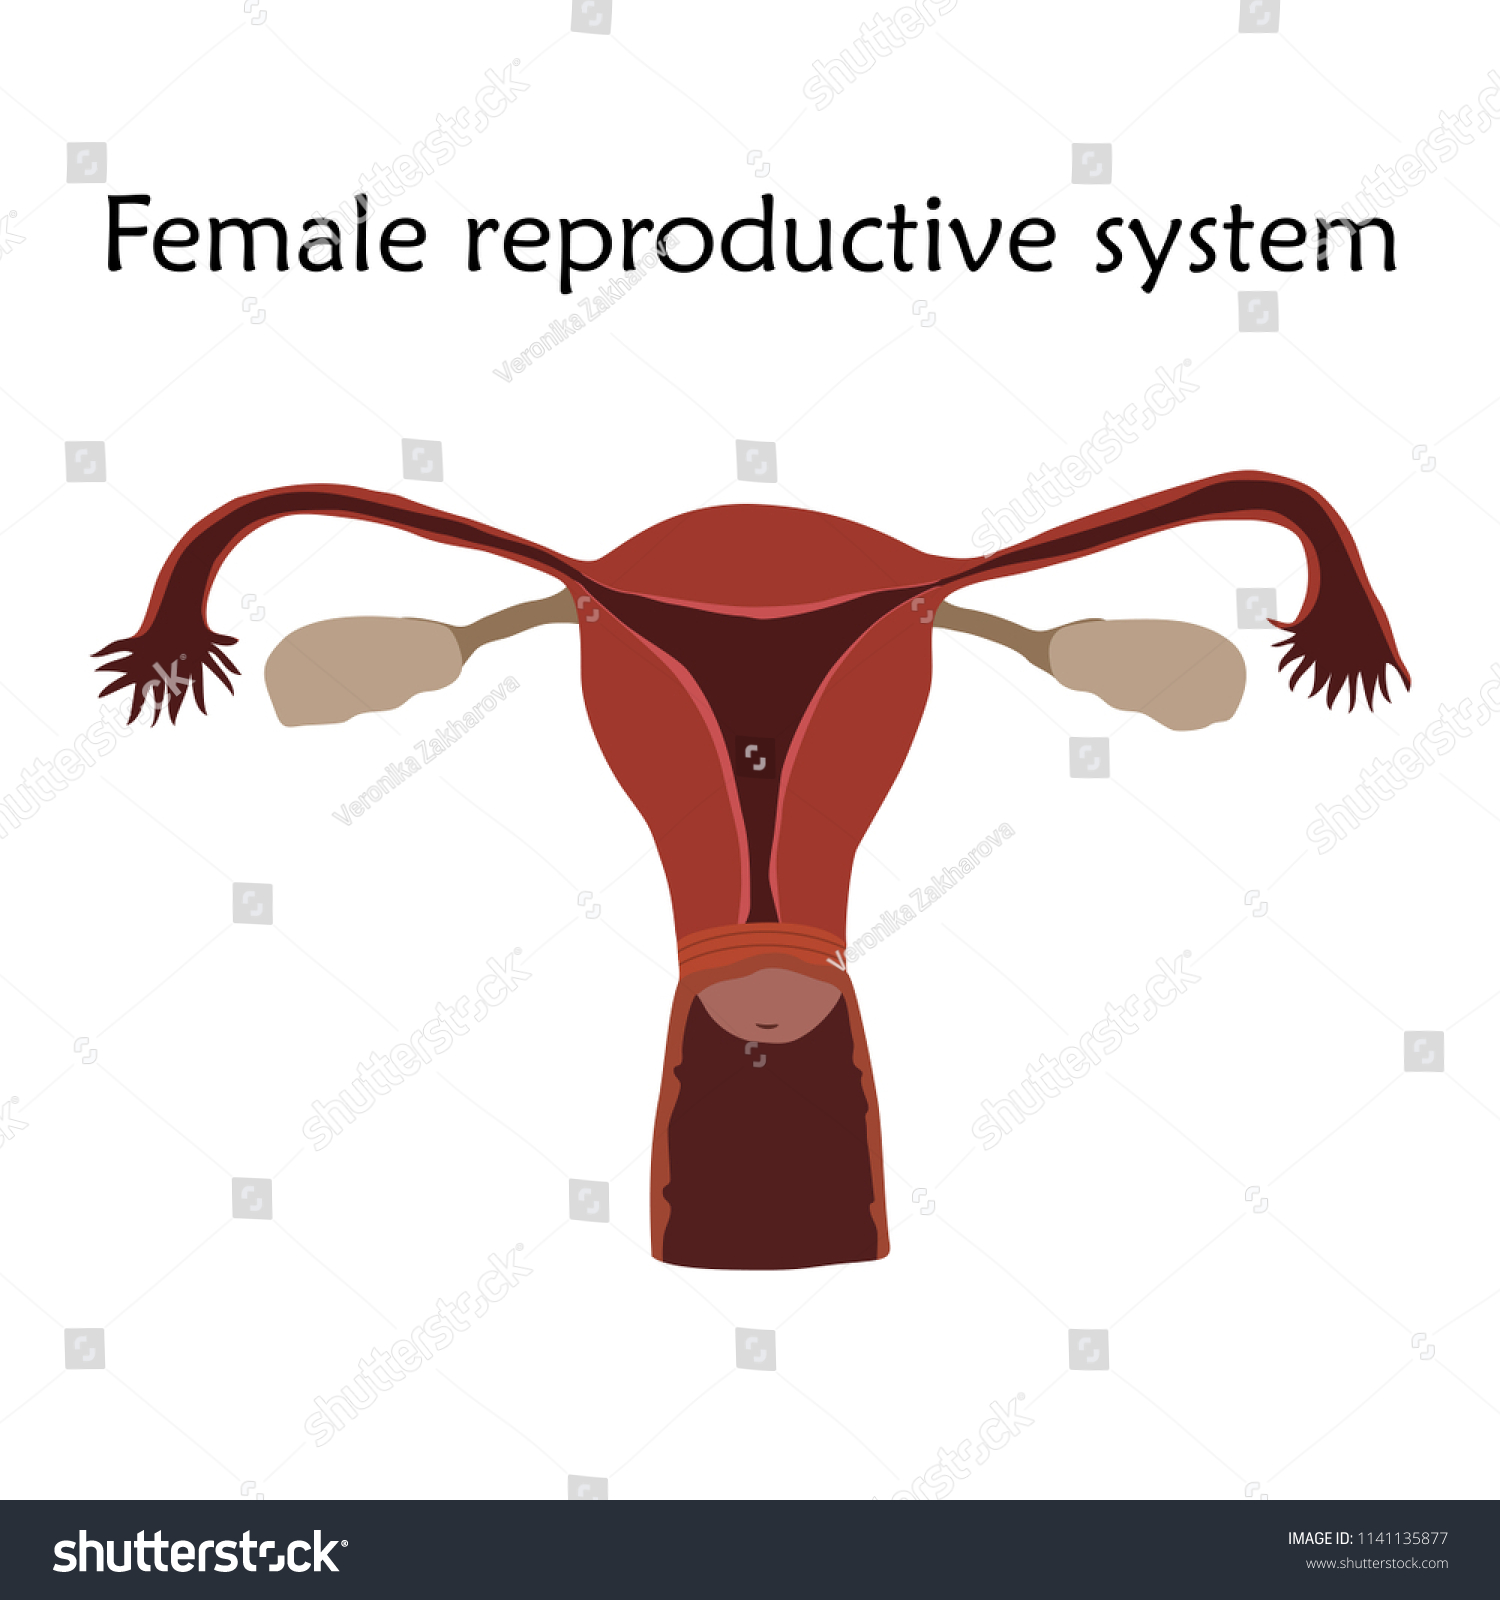 Human Female Reproductive Anatomy 0258